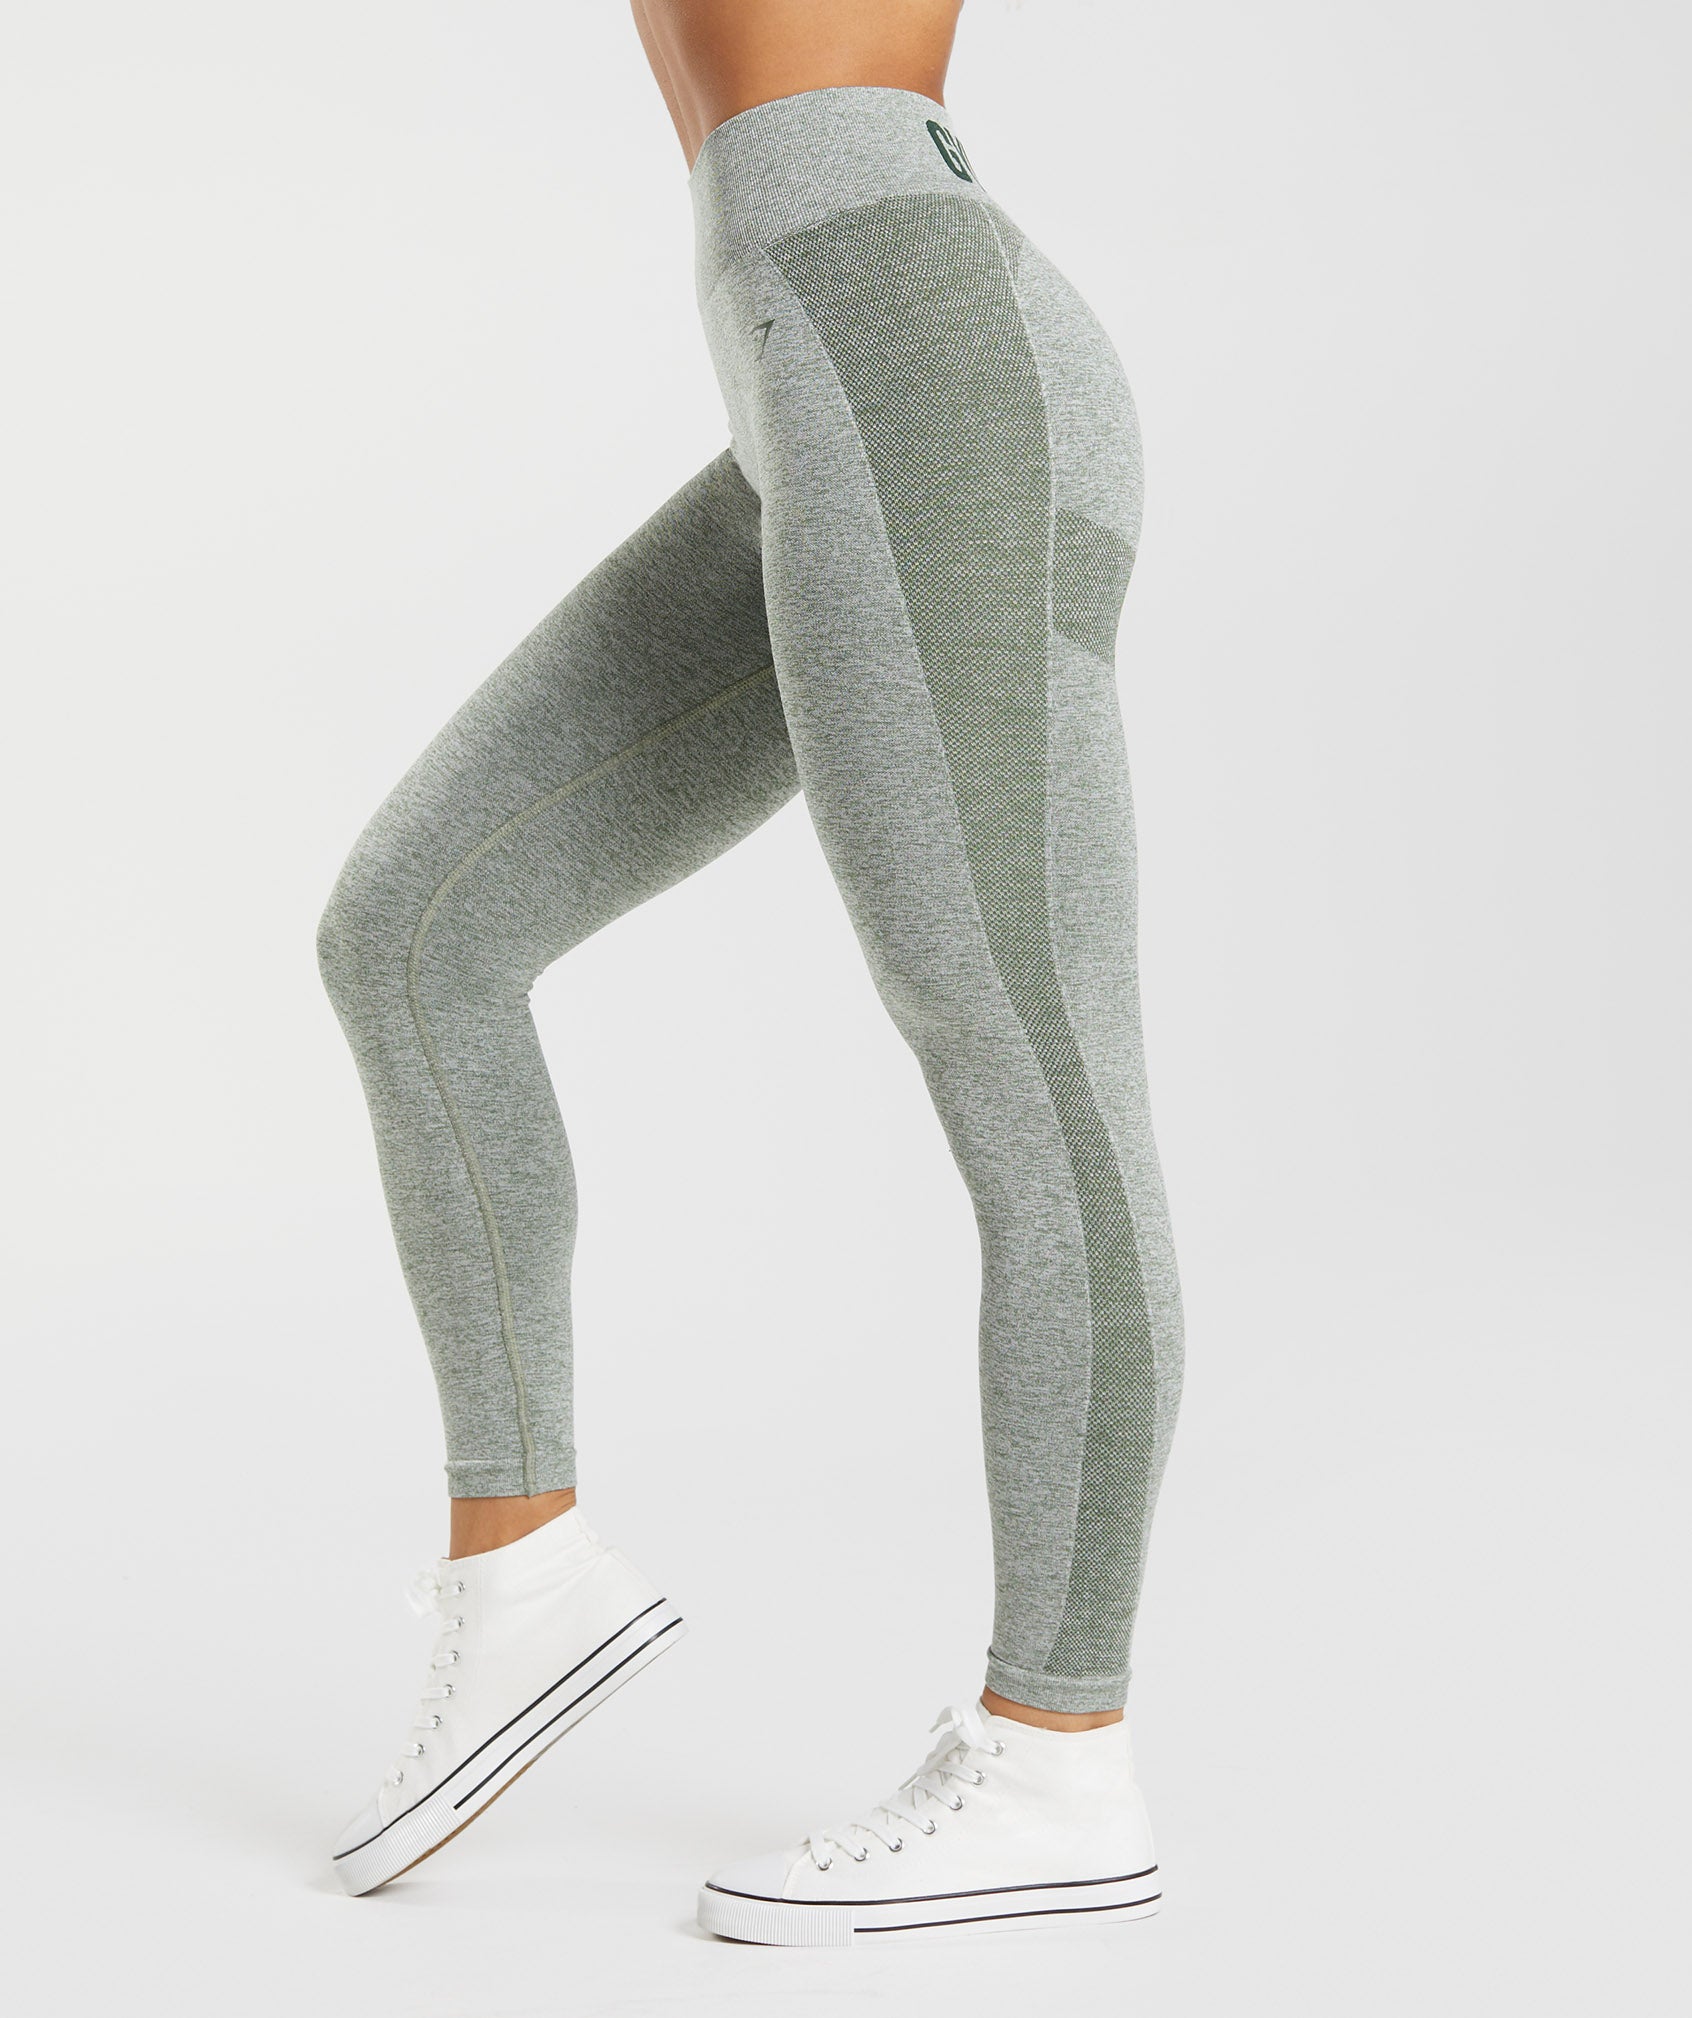 Gymshark, Pants & Jumpsuits, Gymshark Flex Leggings Mid Rise Olive Green  Womens Size M